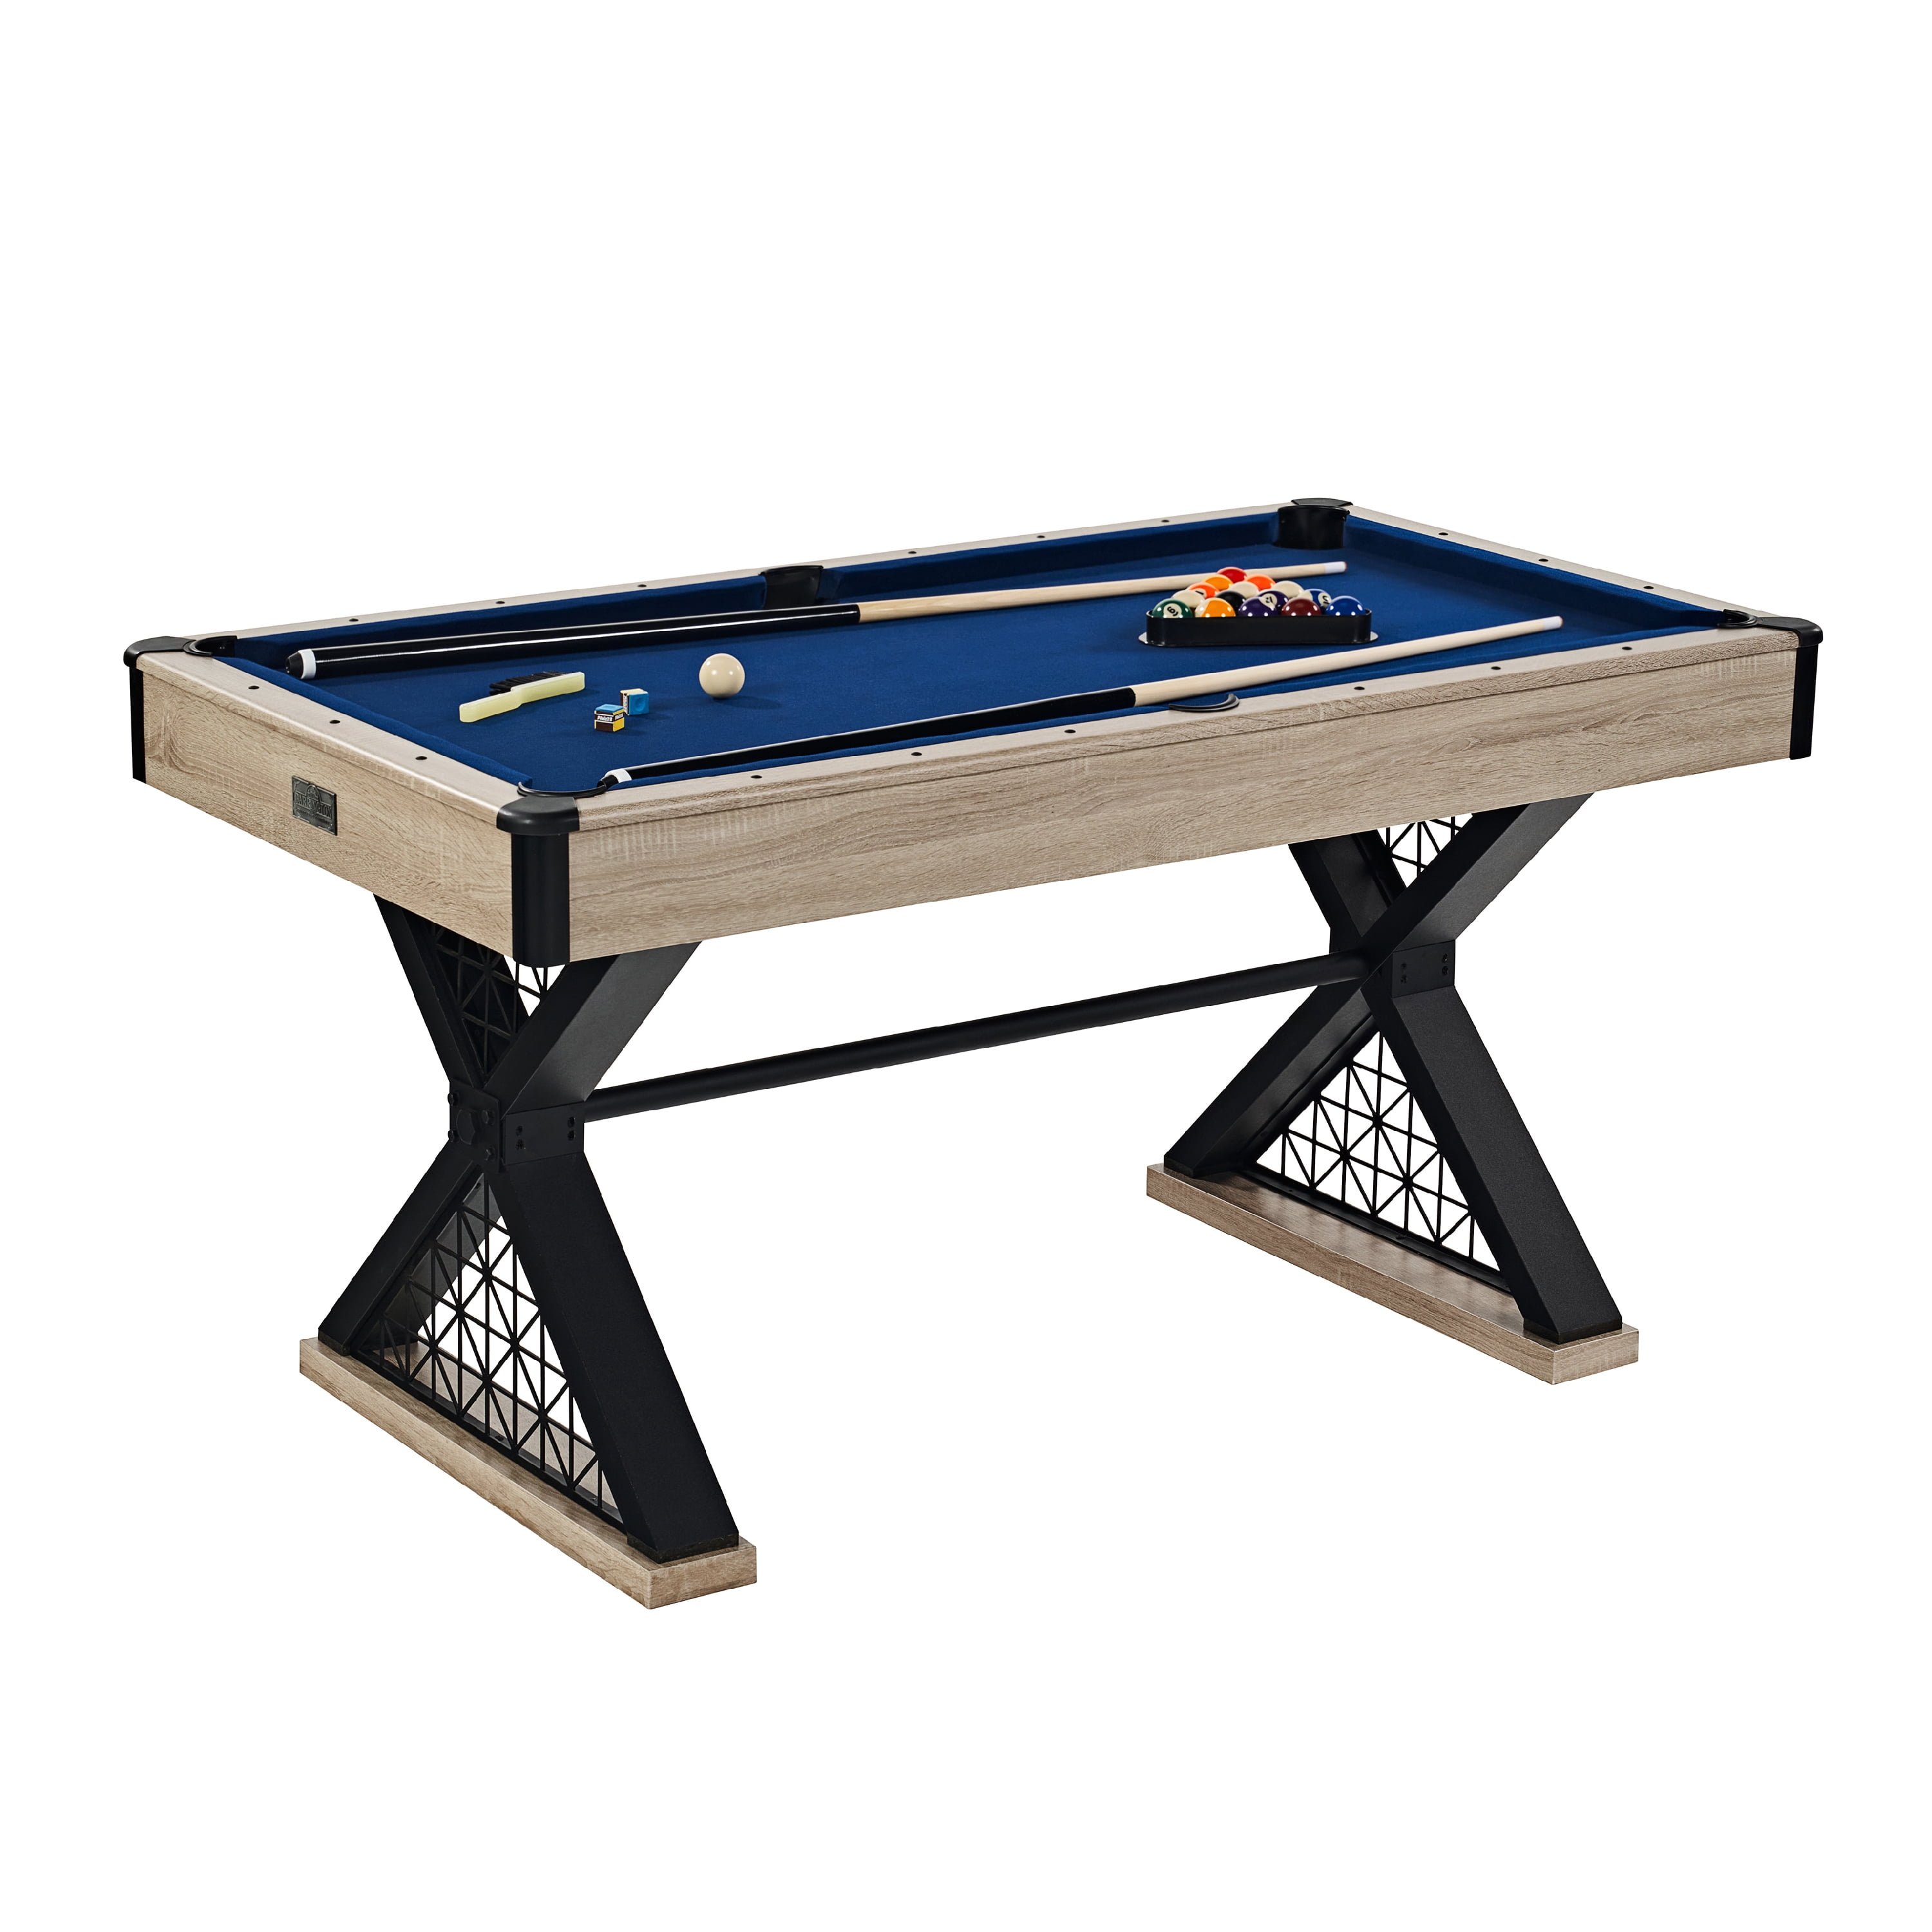 Barrington Billiards 5 Brooks Drop Pocket Table With Pool Ball and Cue Stick Set